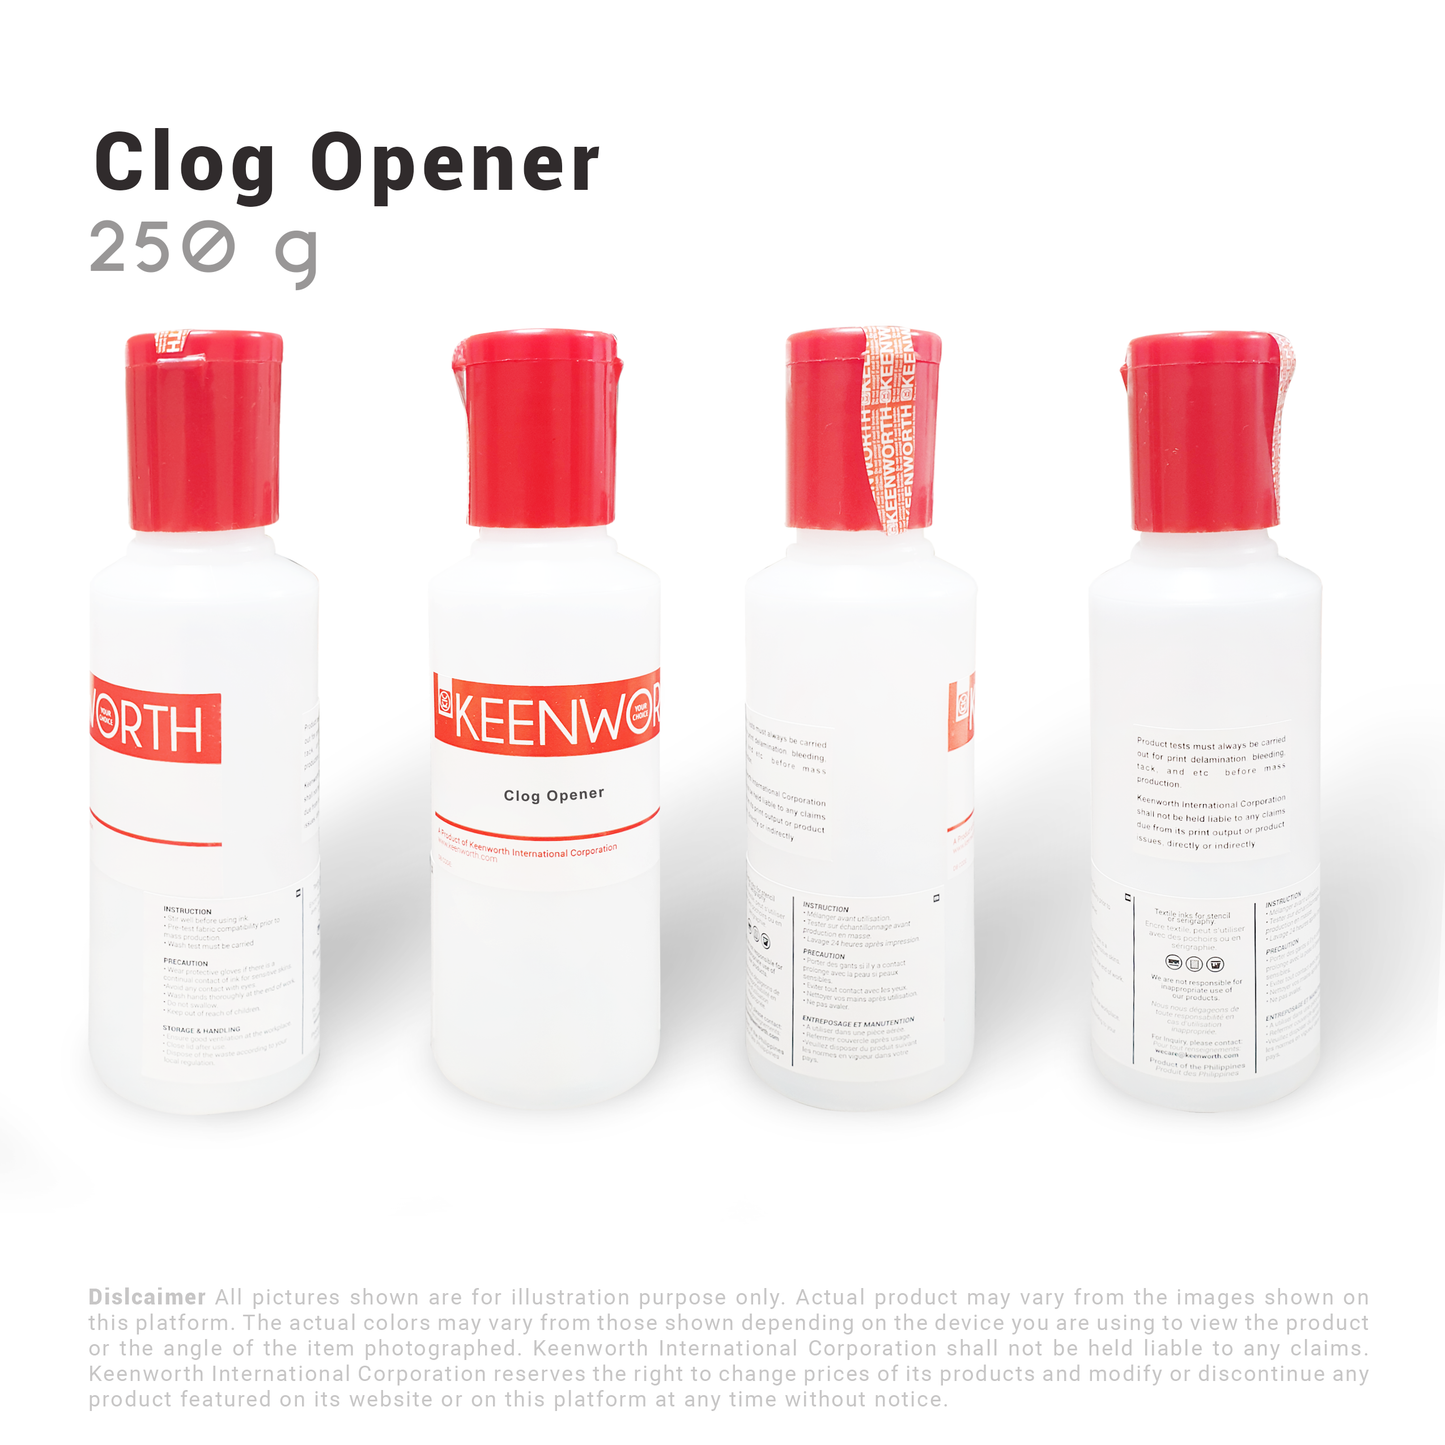 Clog Opener